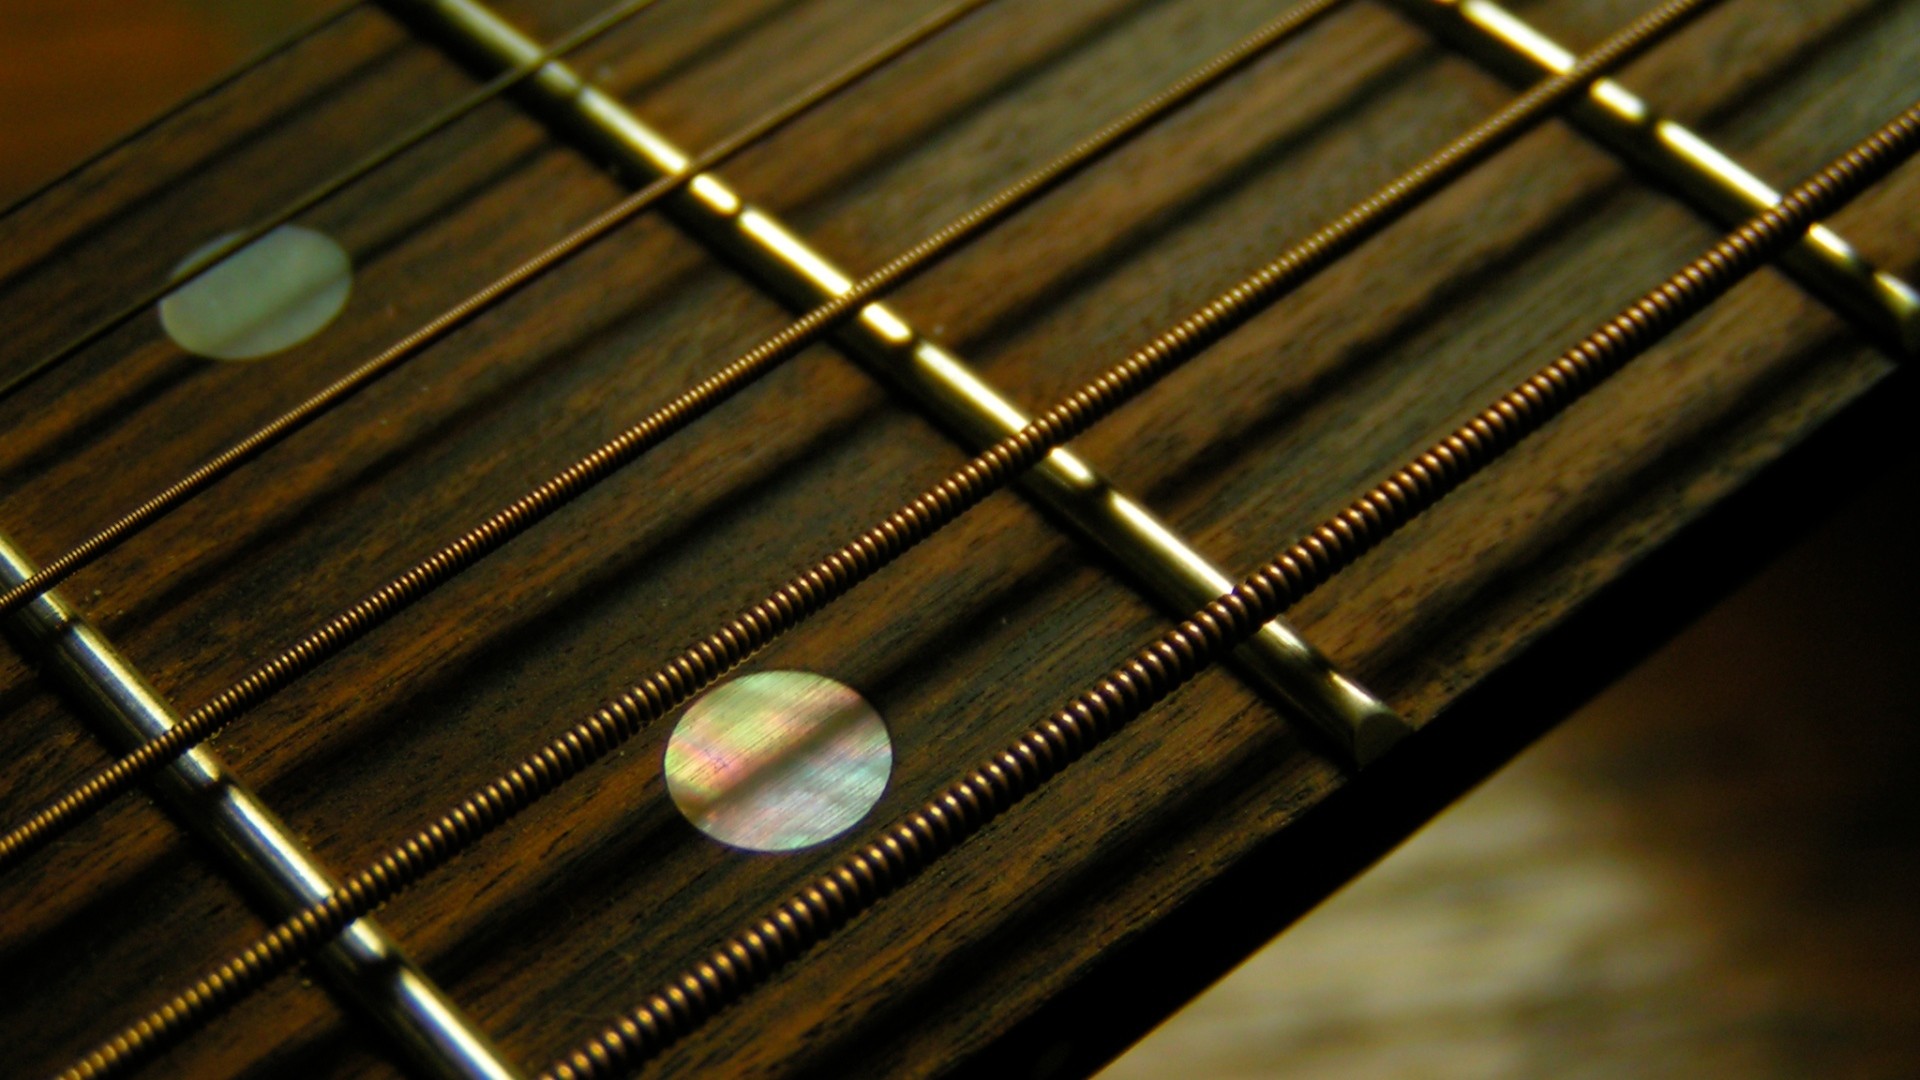 1920x1080 inlays acoustic guitar wallpaper desktop my martin dm acoustic guitar